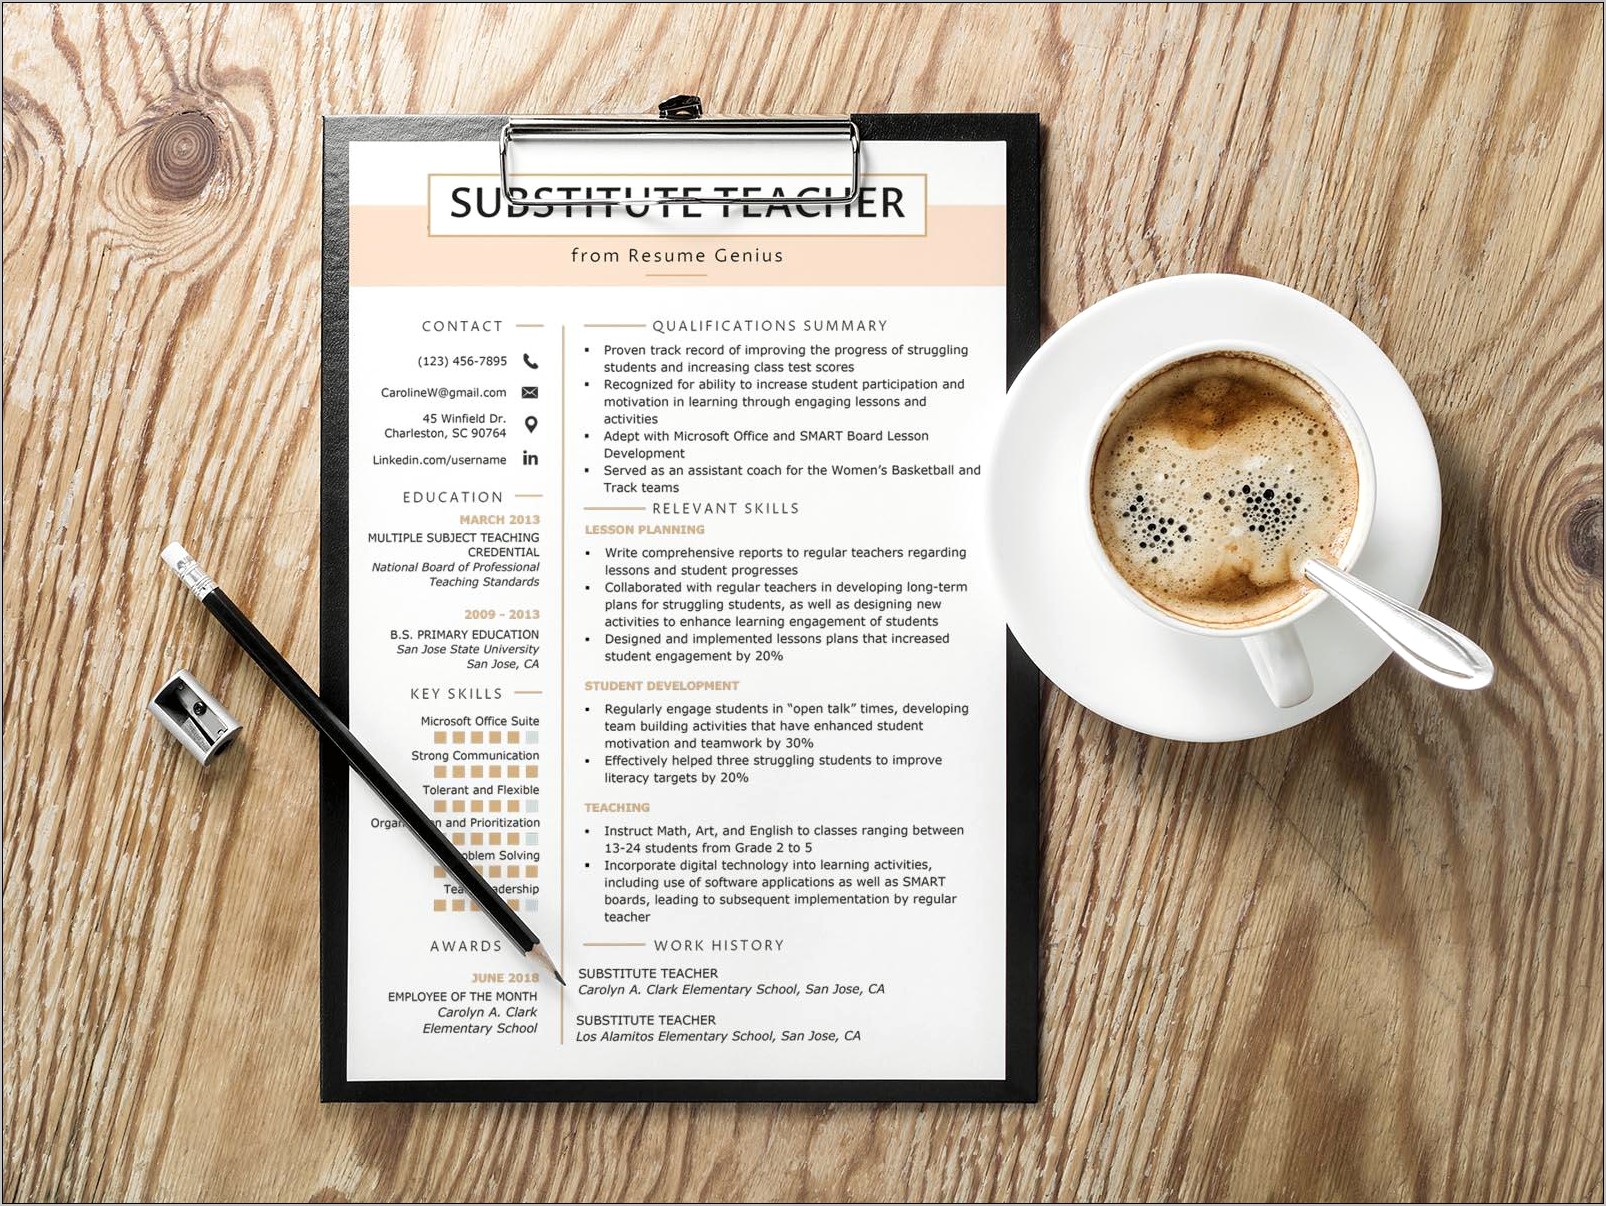 Sample Substitute Teacher Resume Objective